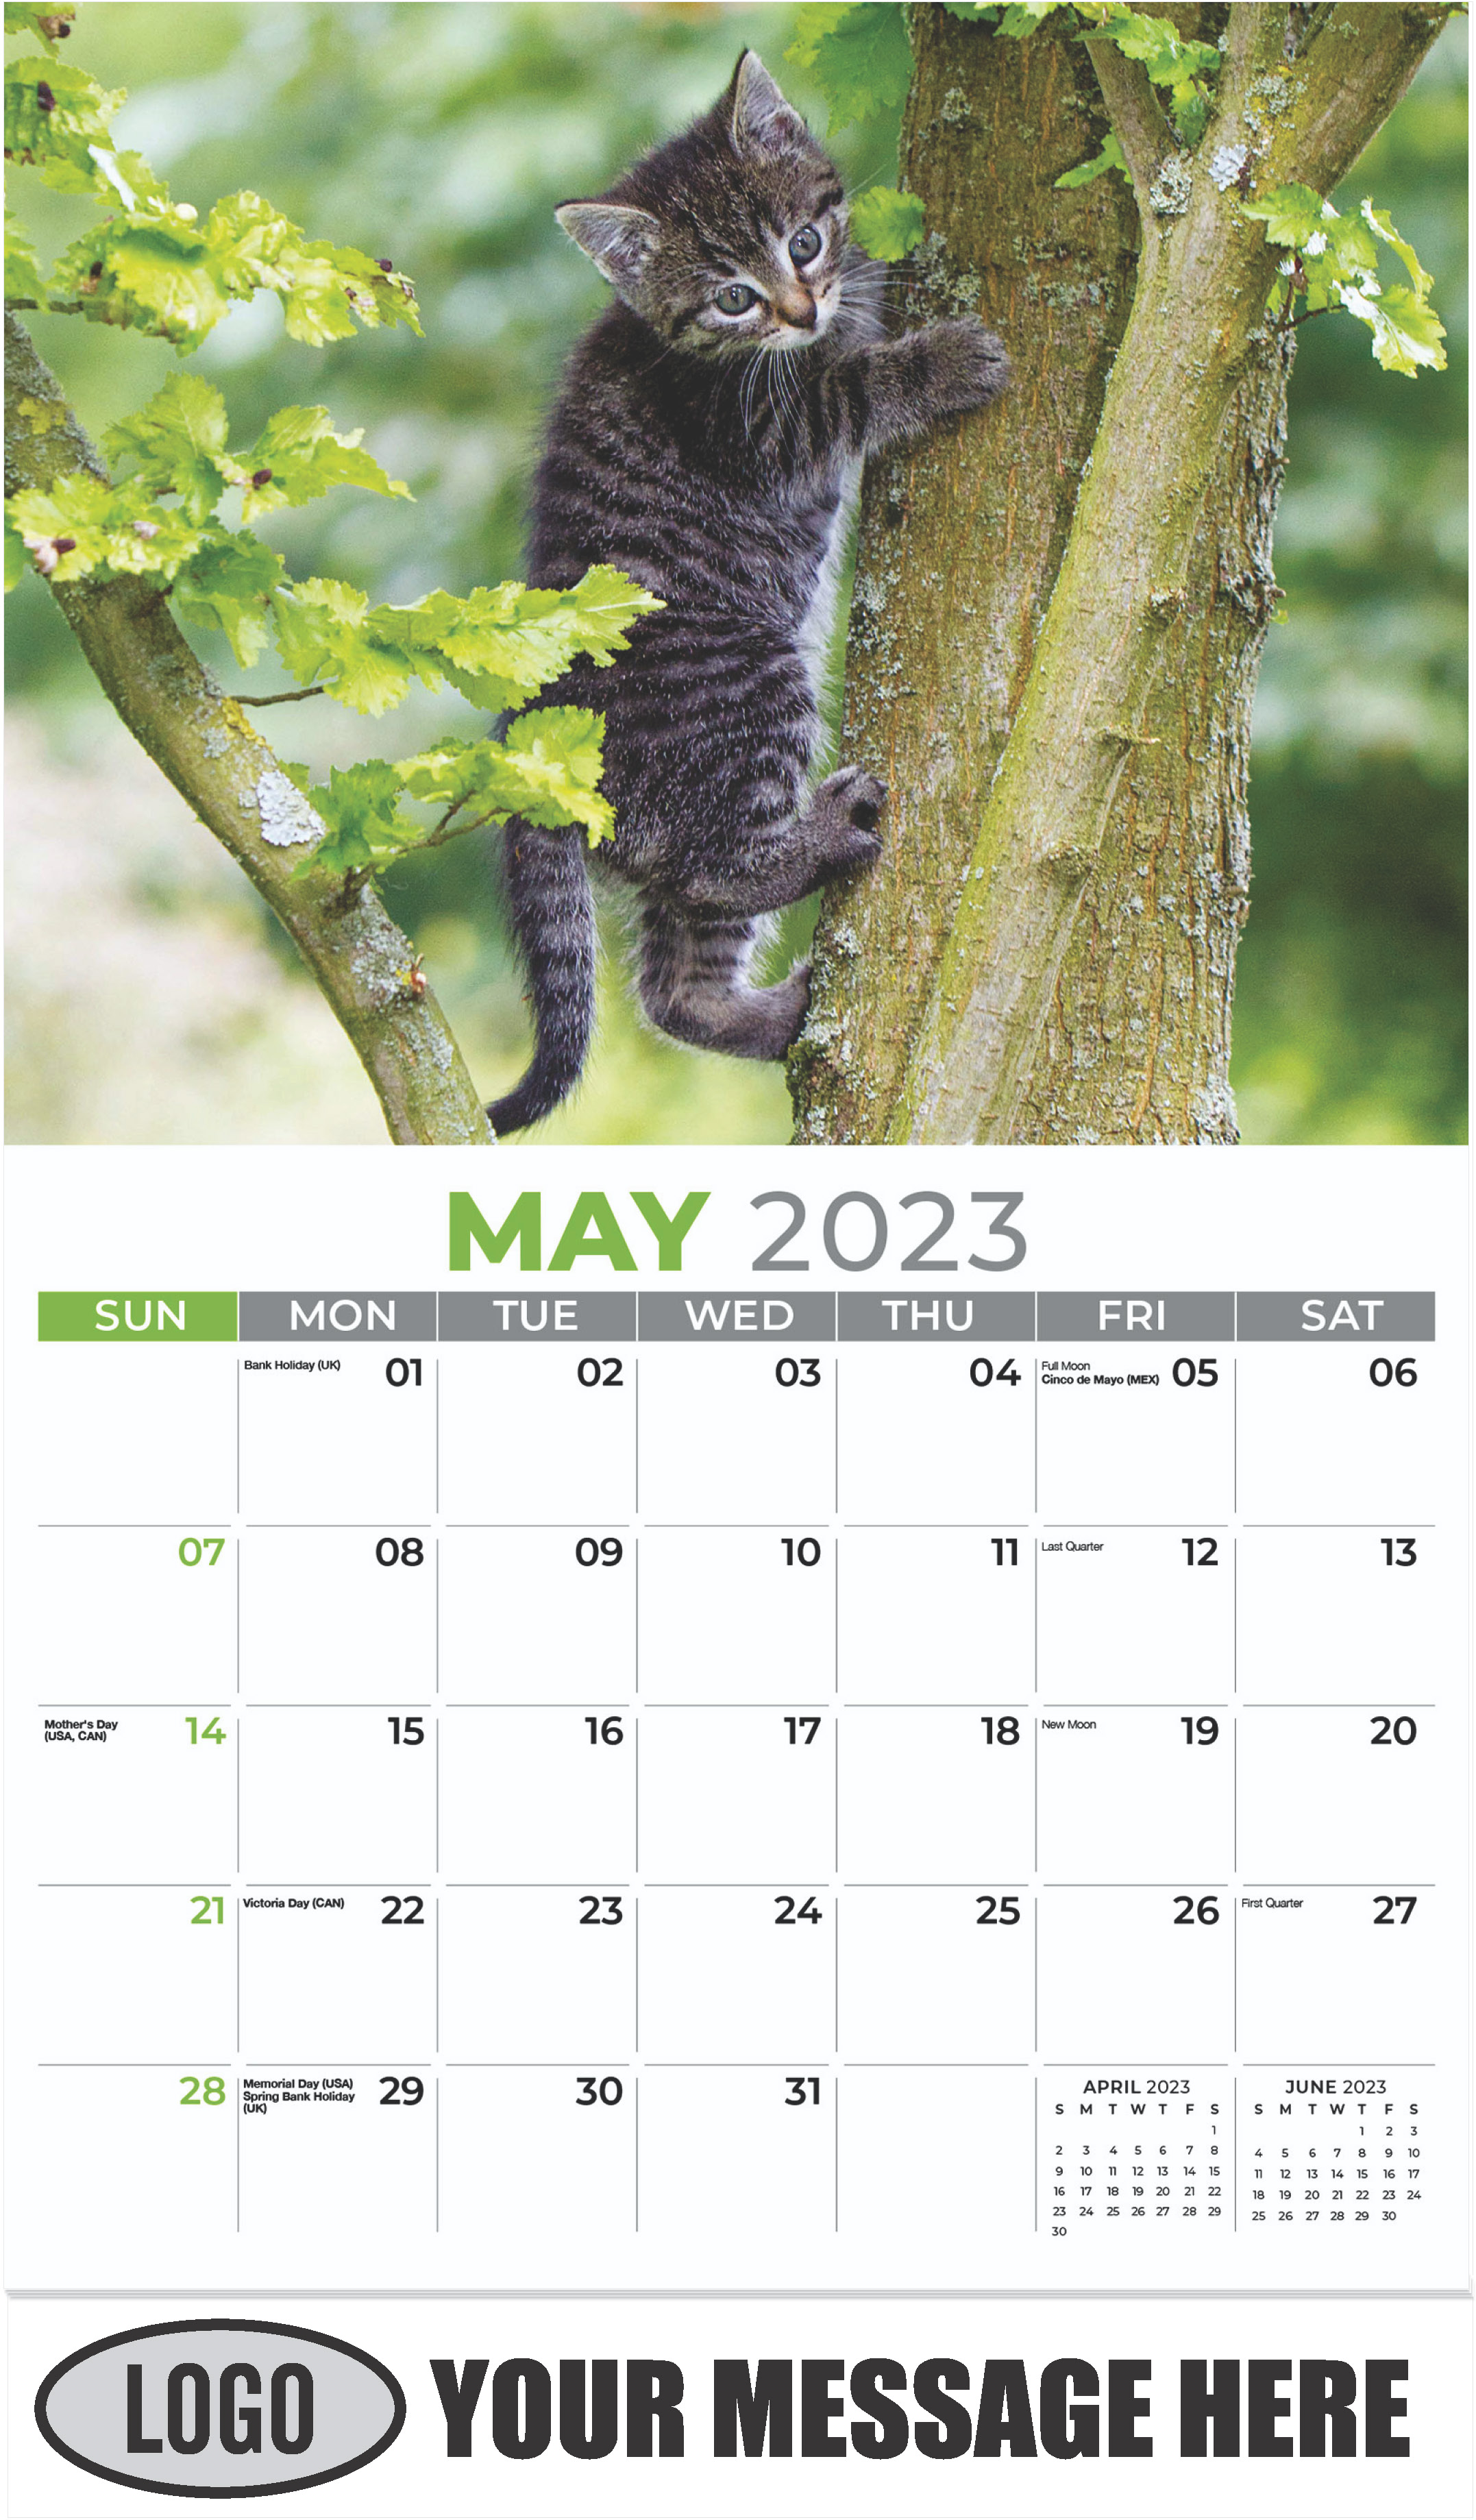 Tabby - May - Kittens 2023 Promotional Calendar